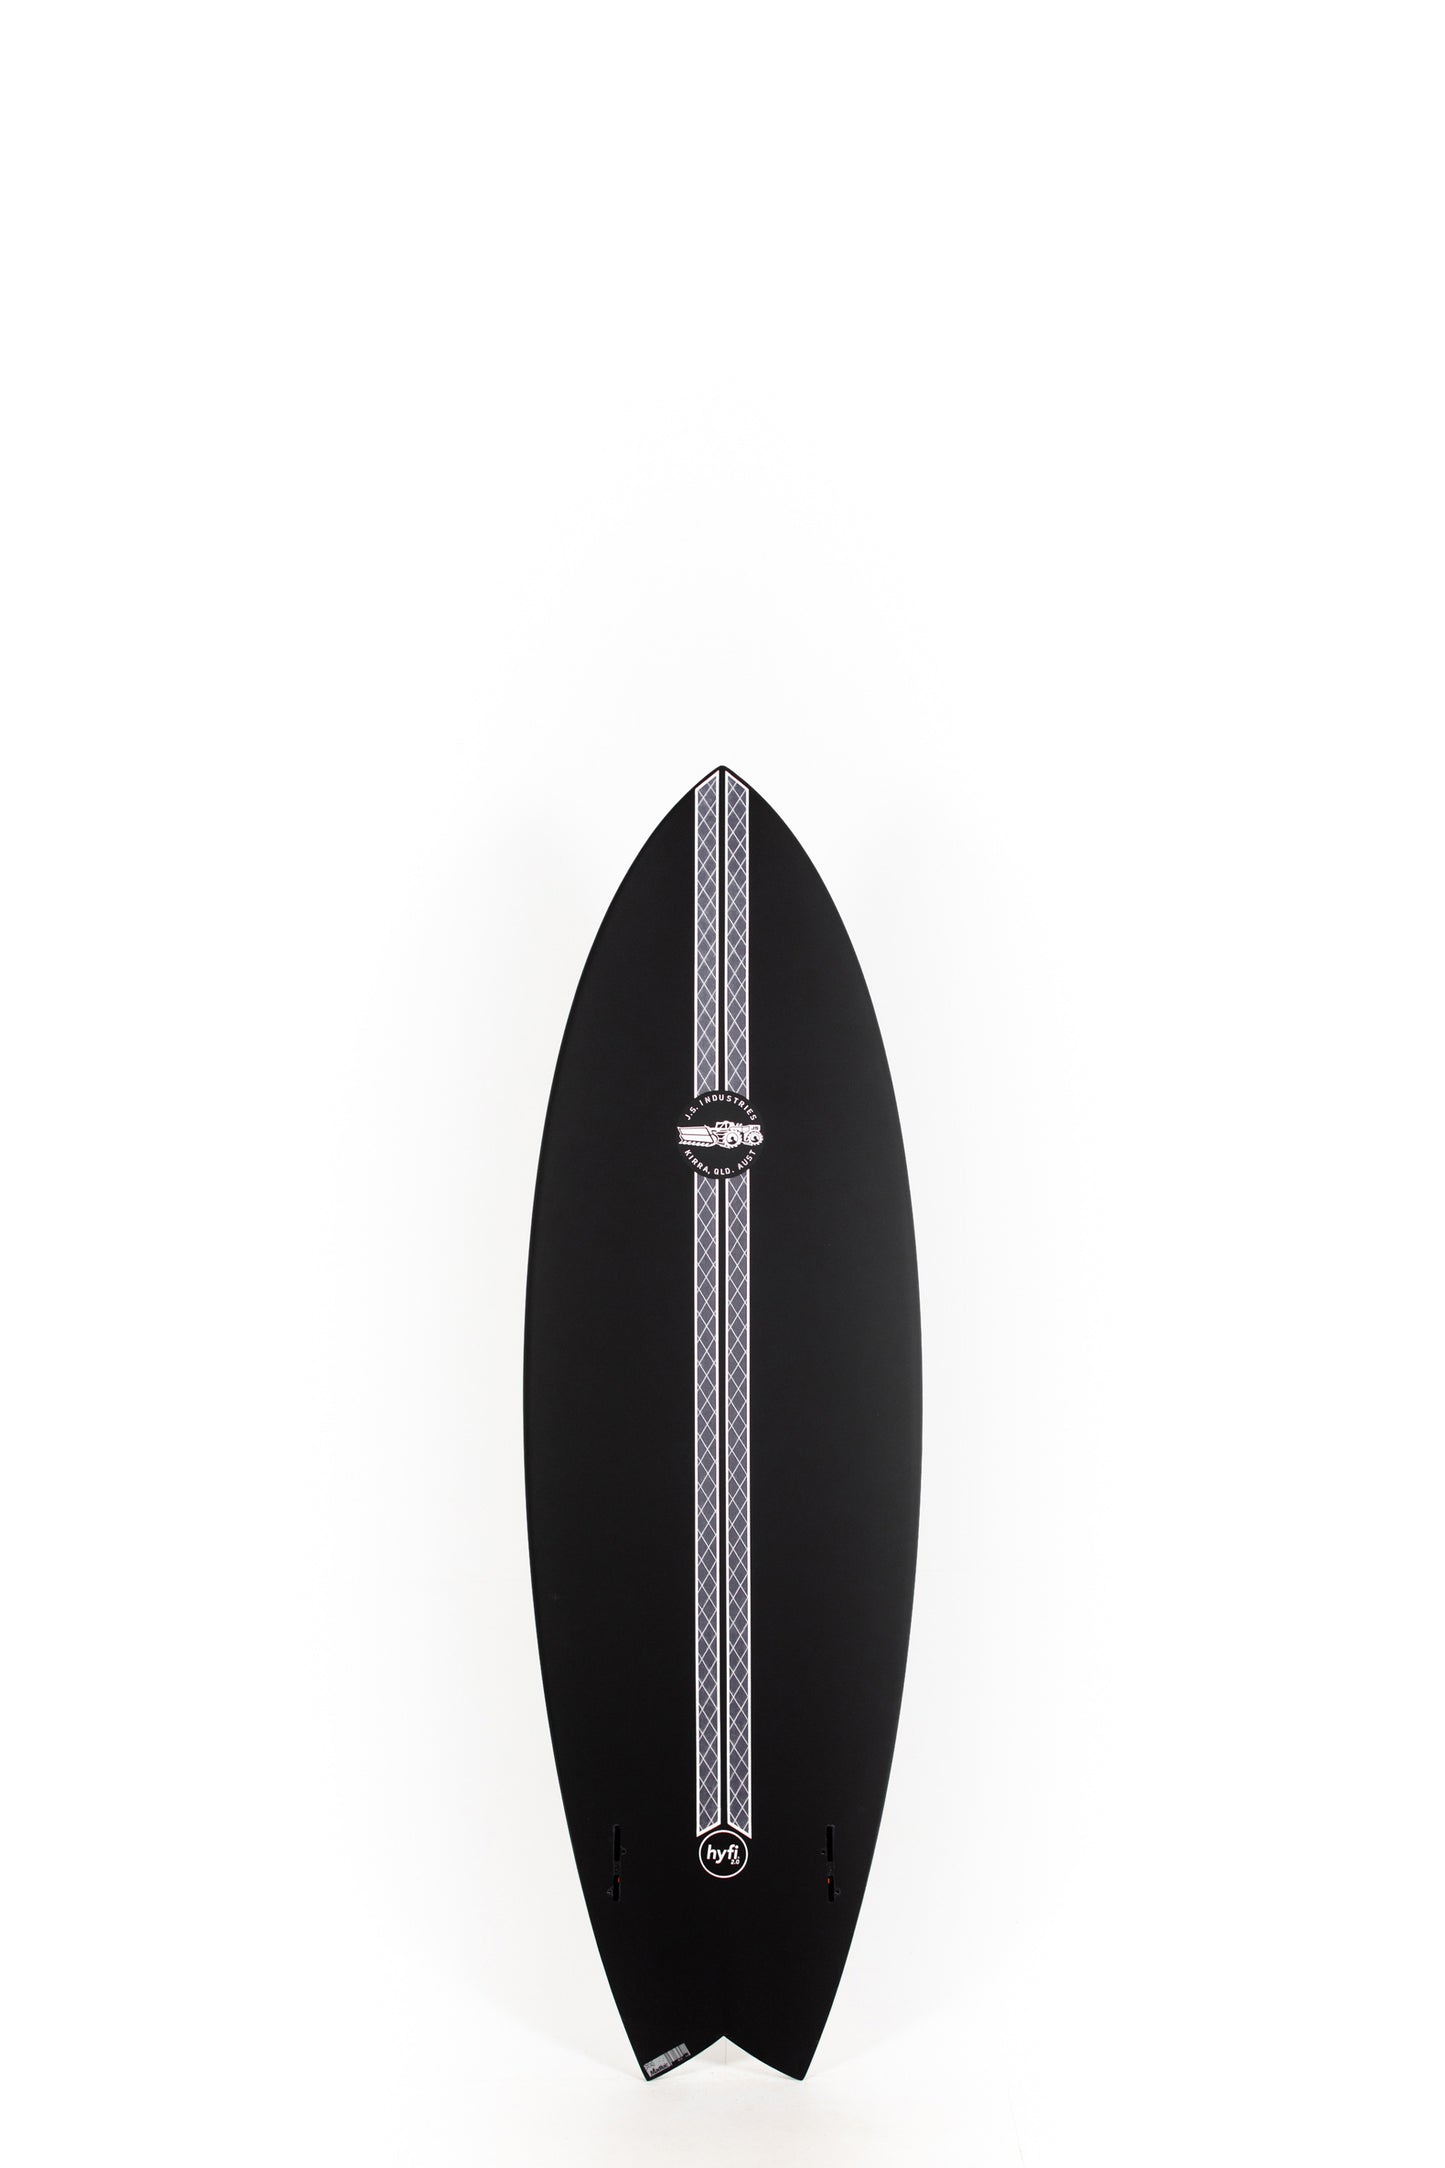 Pukas Surf Shop - JS Surfboards - BLACK BARON HYFI - 5'8" x 20 1/4 x 2 1/2 x 31,7L - BLACKBHYFI508